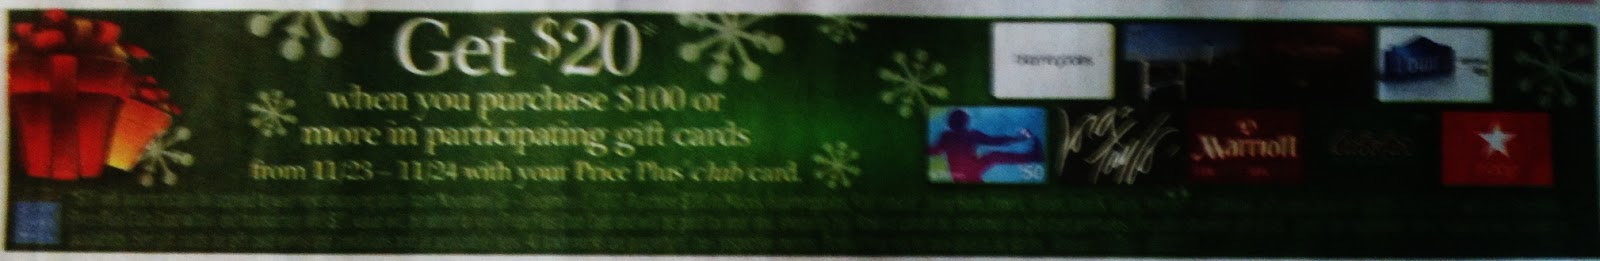 20 Gift Card Catalina ShopRite 11/23 11/24